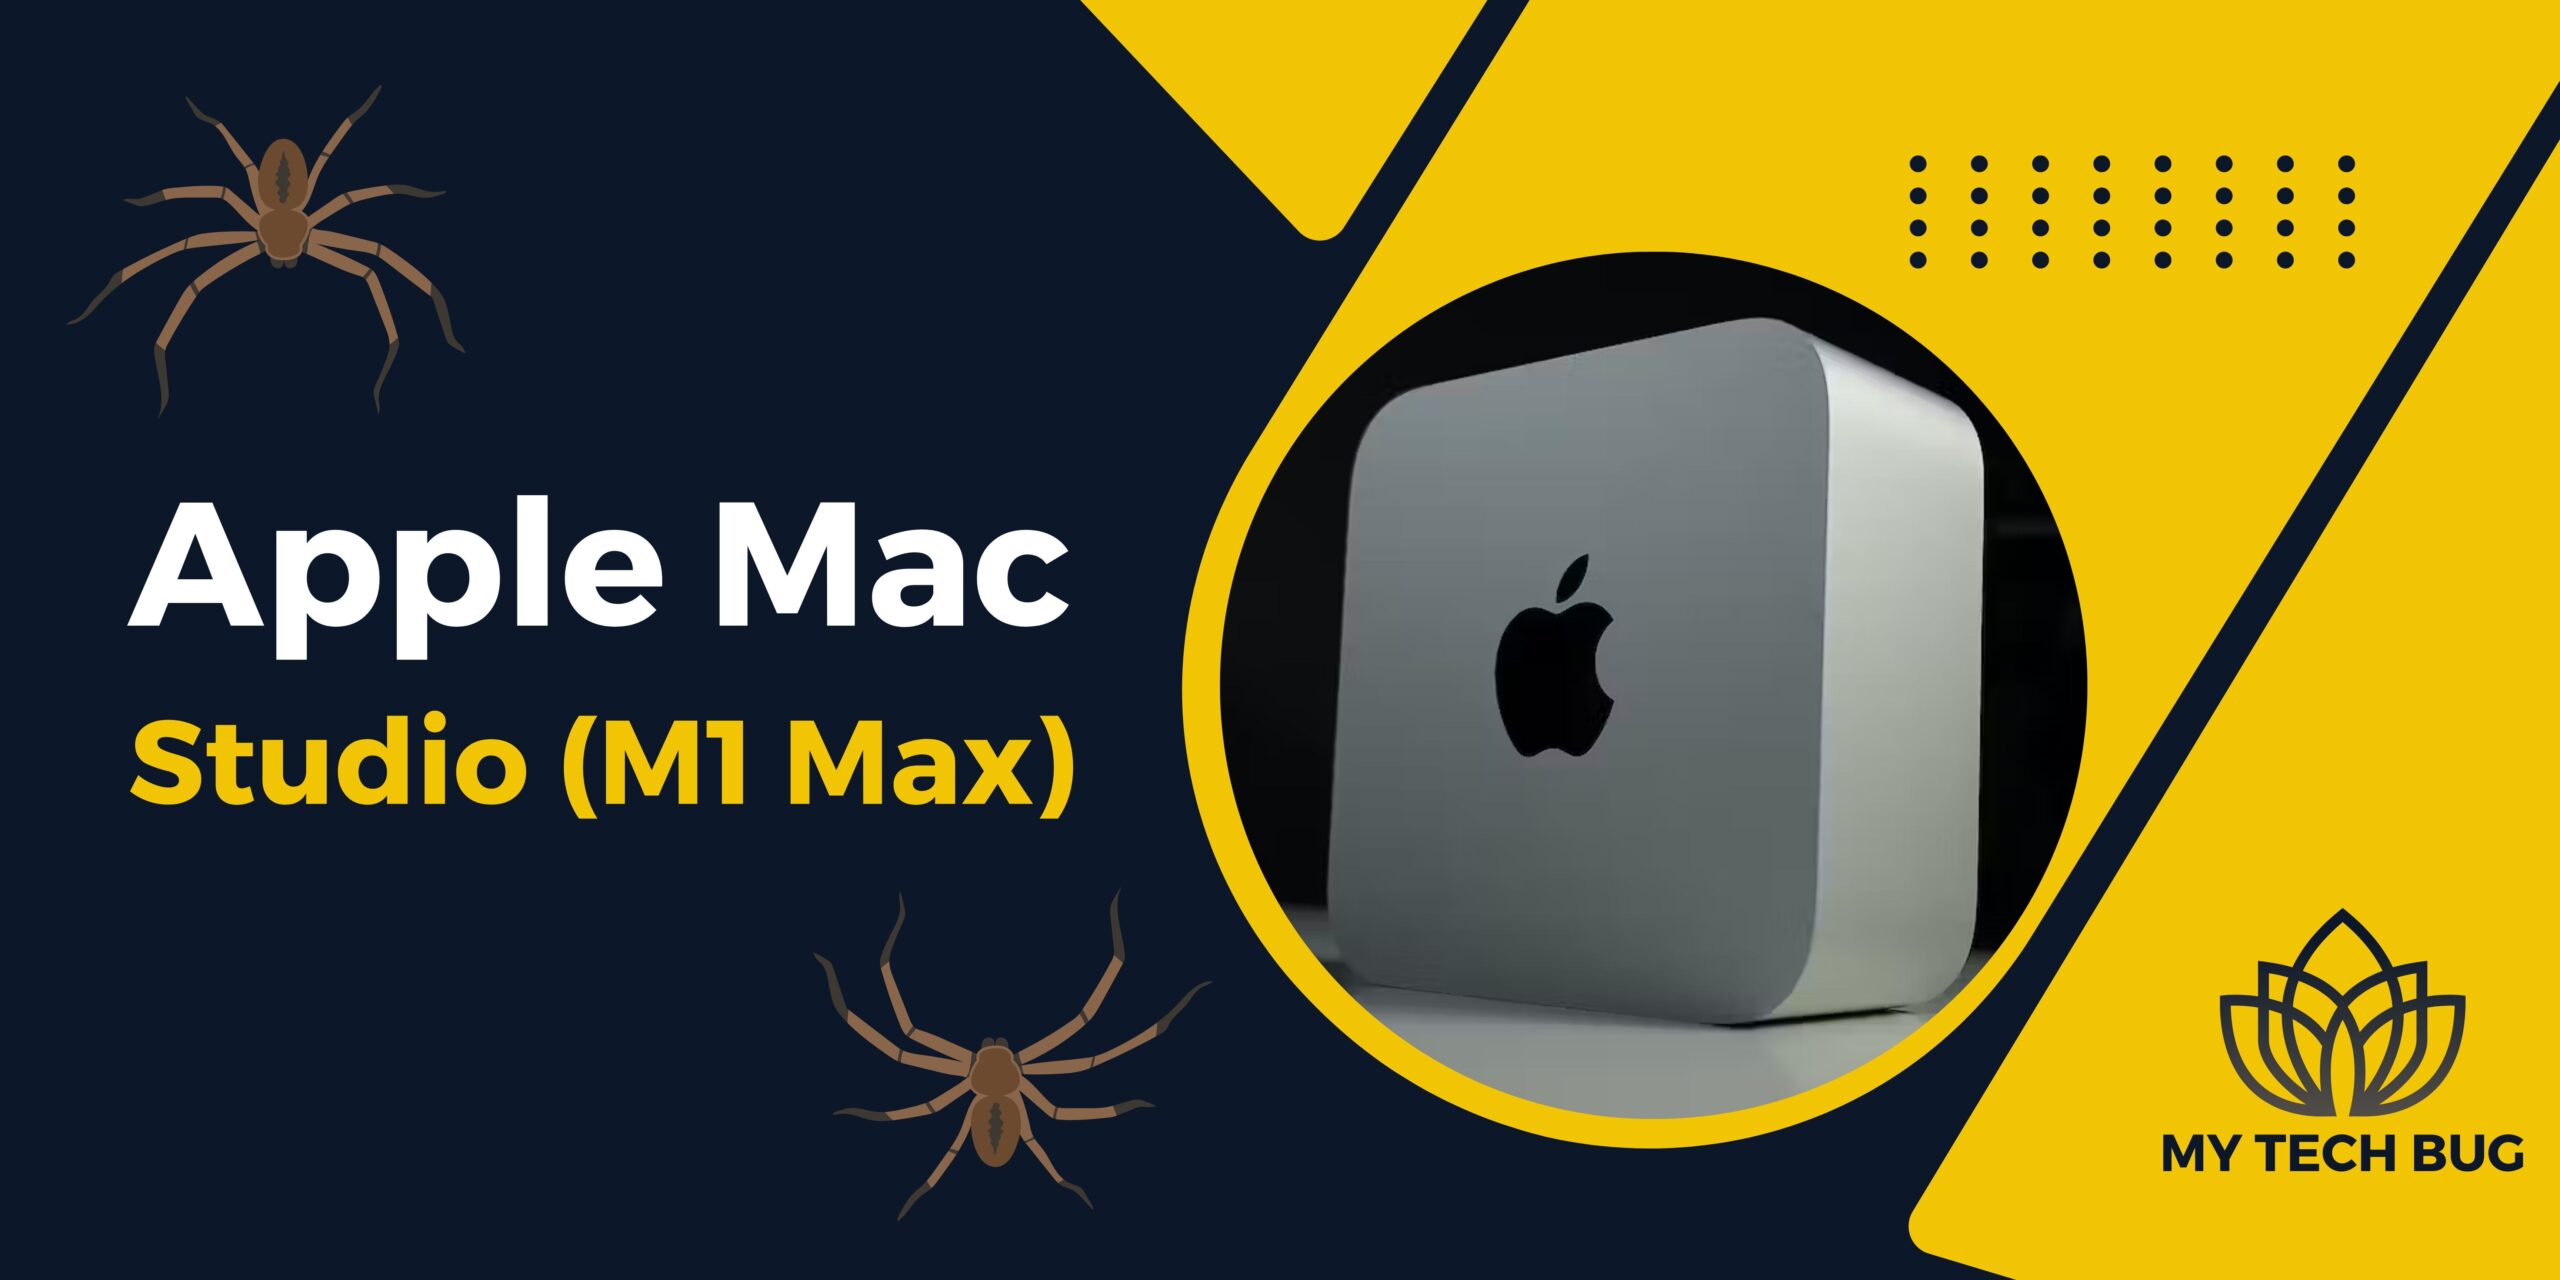 Apple Mac Studio (M1 Max) Review: Compact Powerhouse